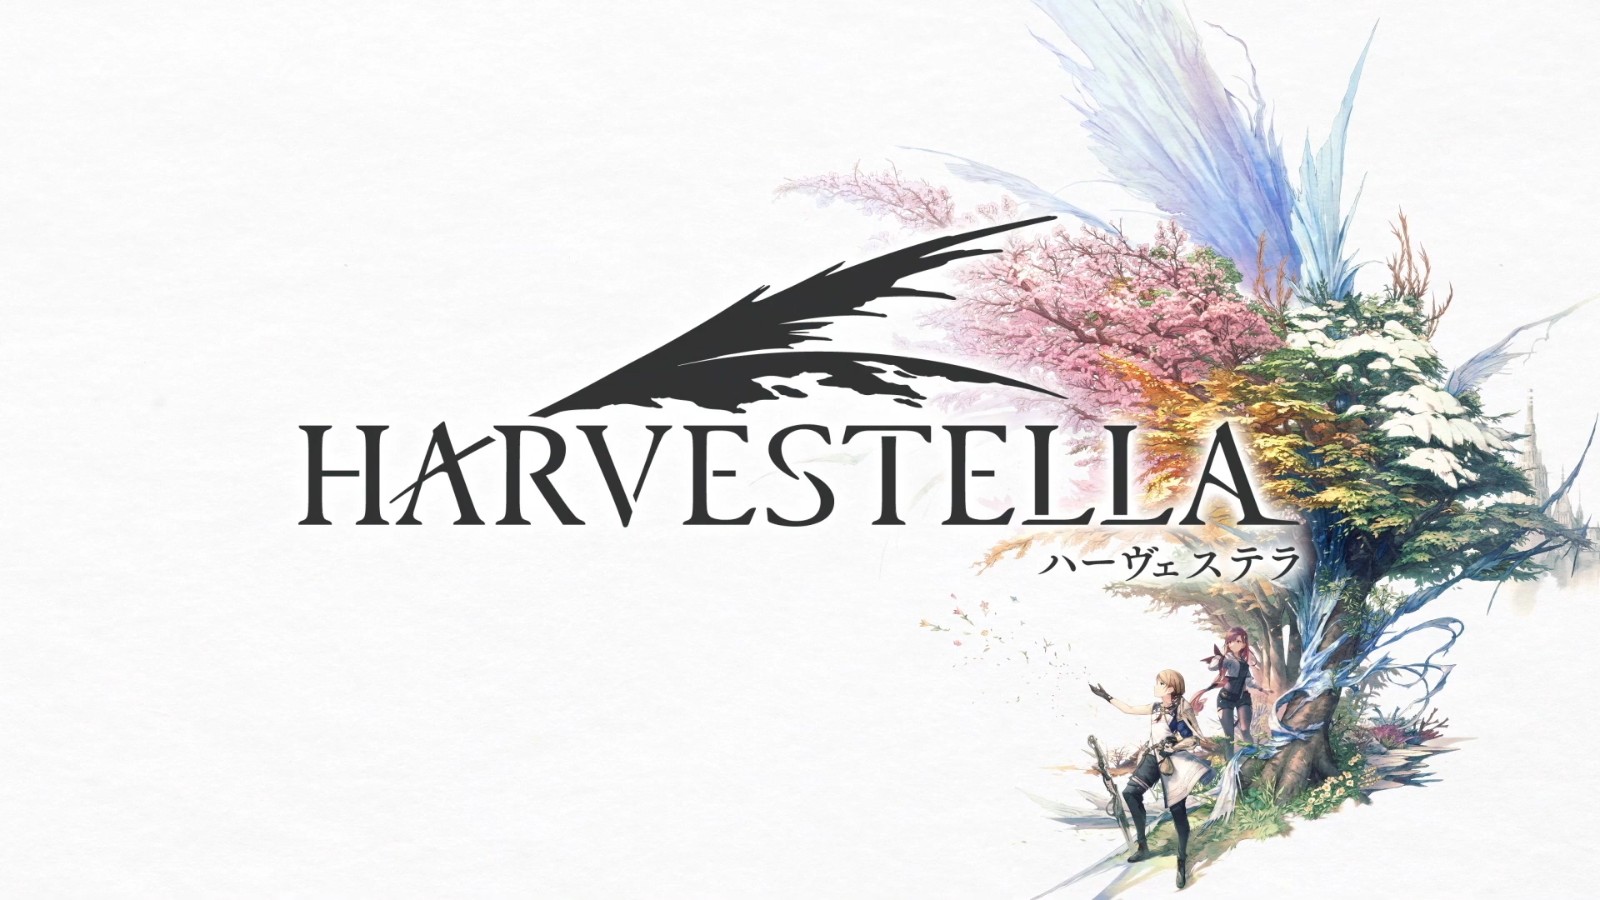 SE公布生活模拟RPG《Harvestella》 登陆PC和Switch